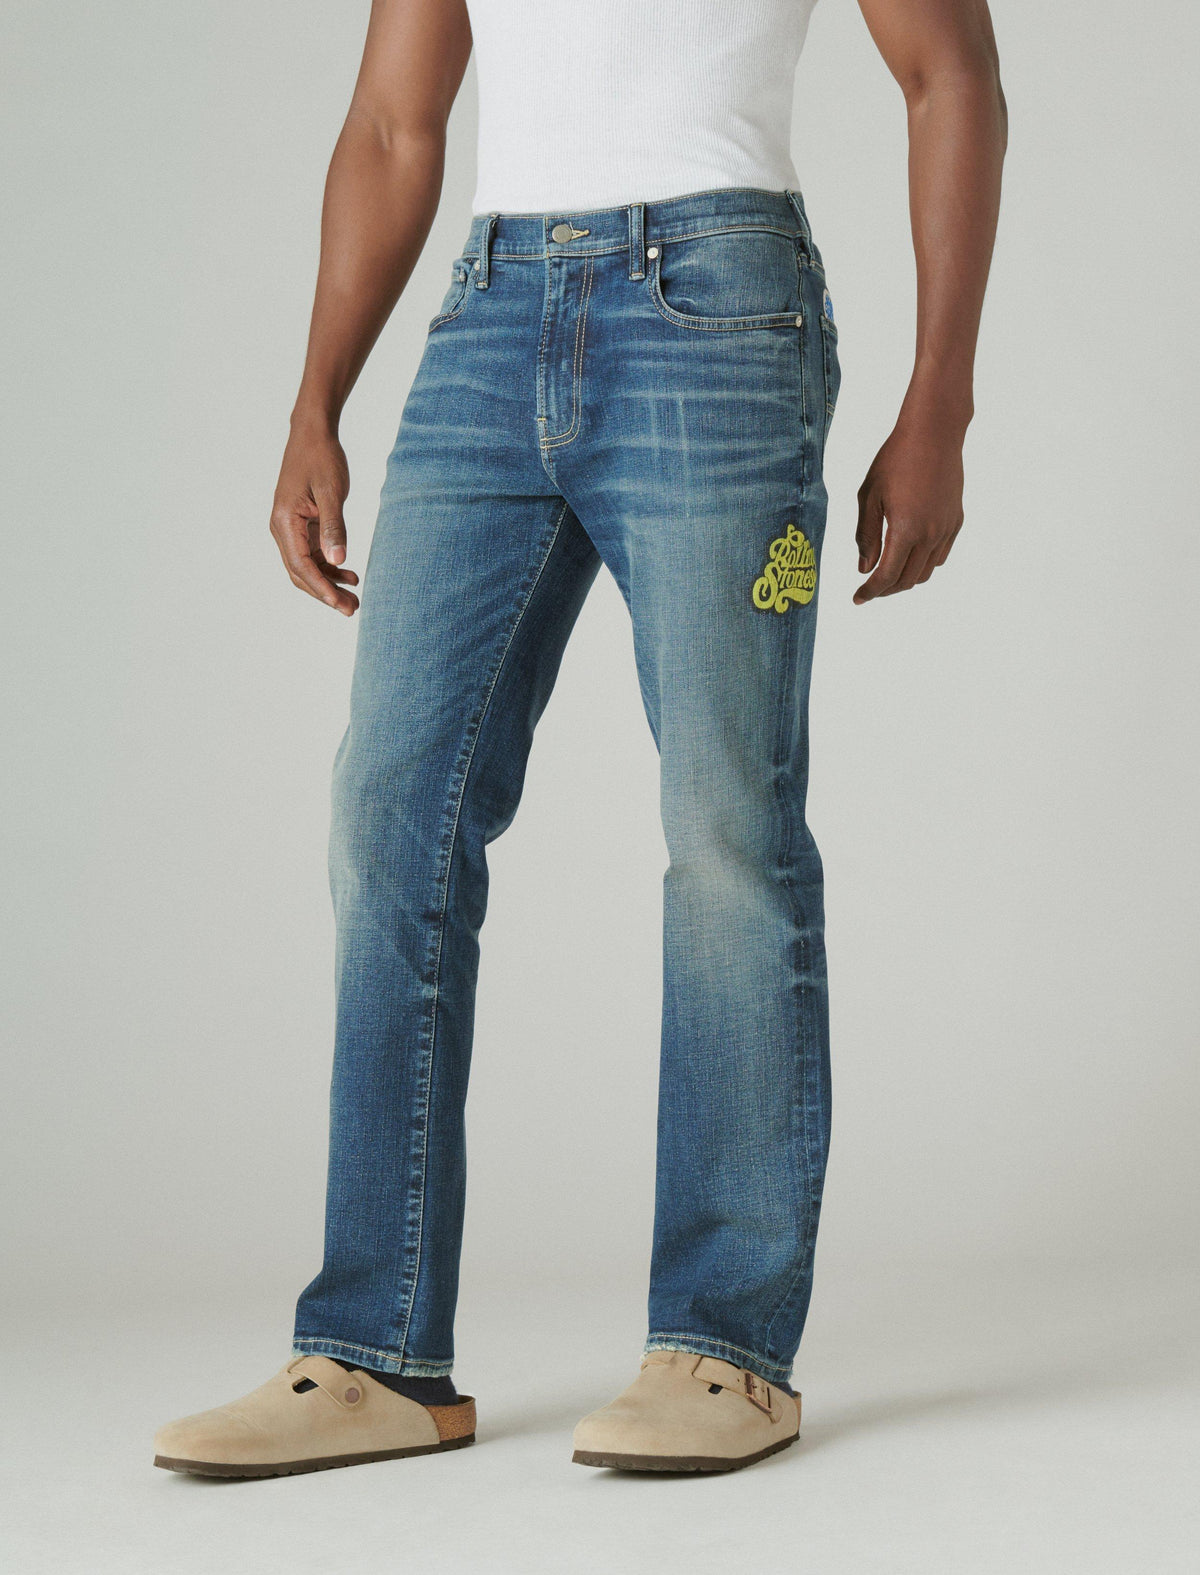 Lucky Brand 223 Straight Rolling Stones Jeans - Men's Pants Denim Straight Leg Jeans Decca